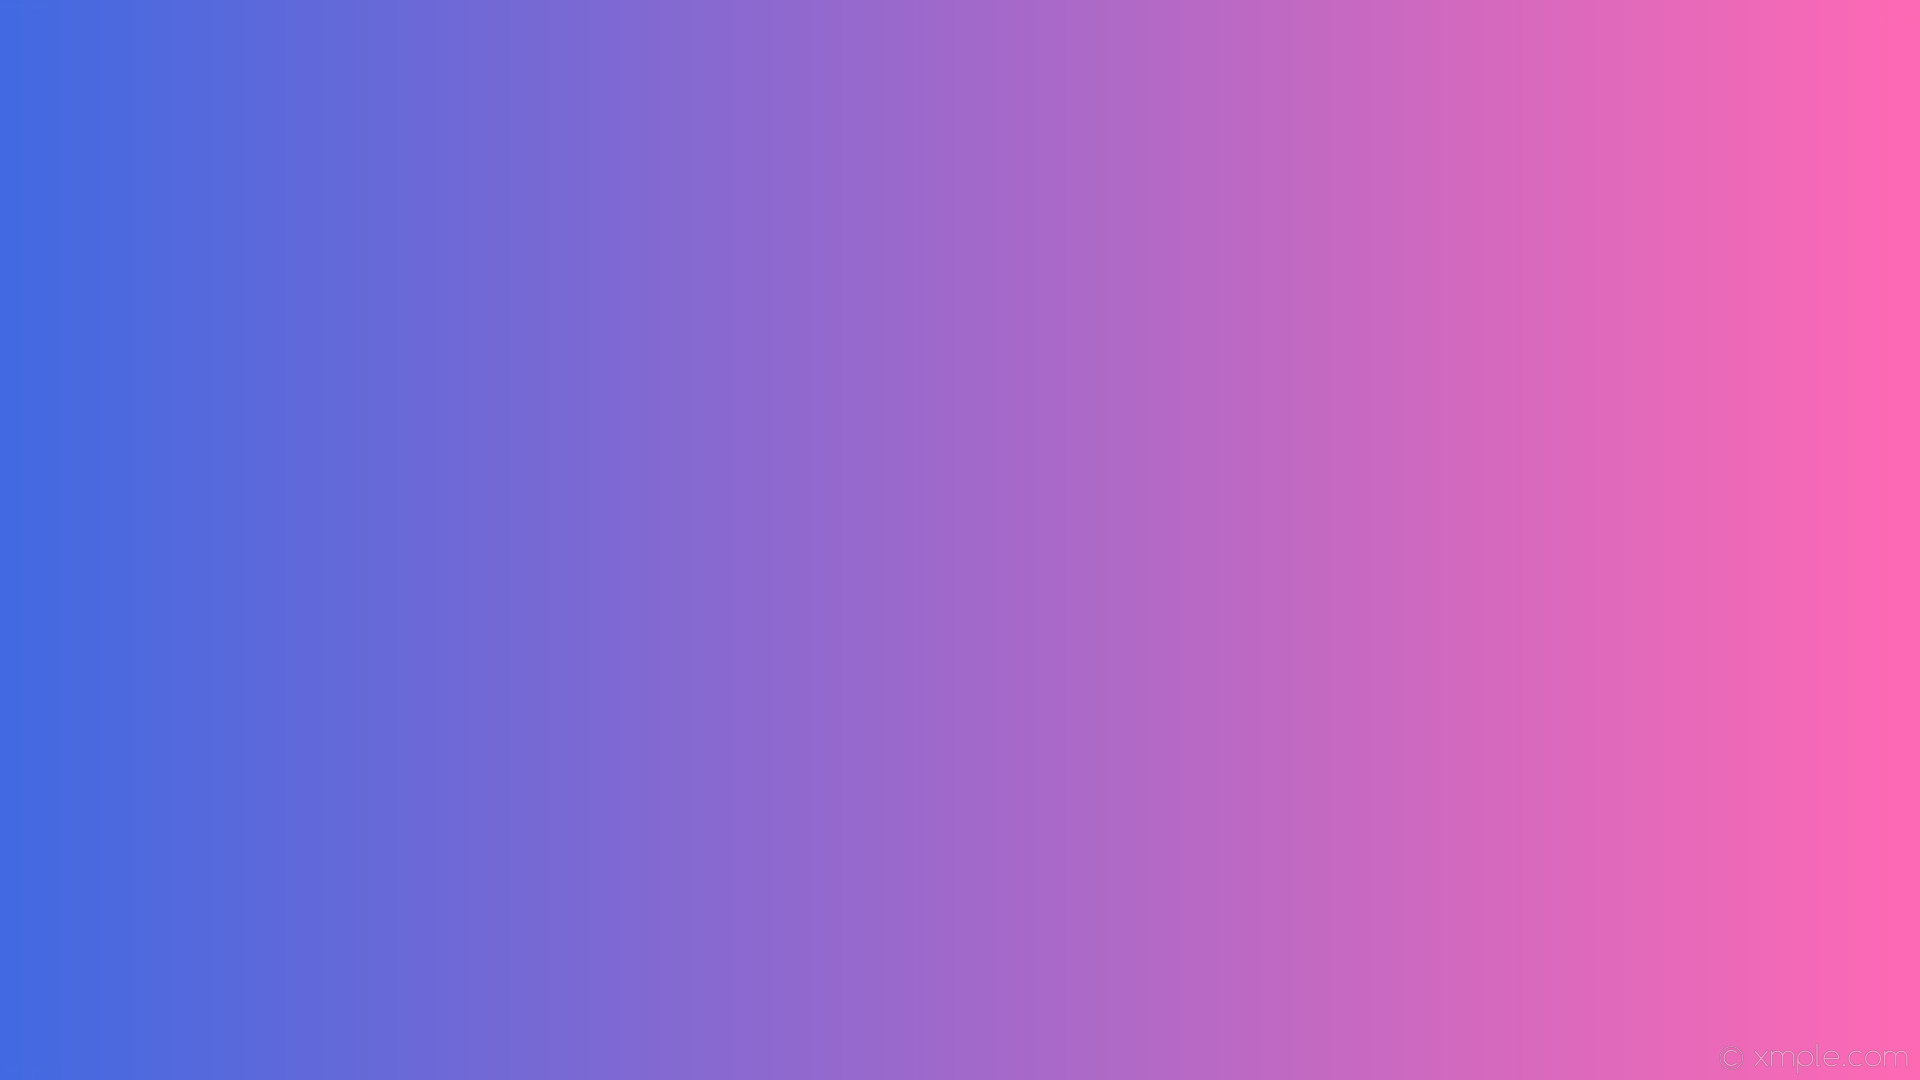 1920x1080 wallpaper pink gradient blue linear hot pink royal blue #ff69b4 #4169e1 0Â°